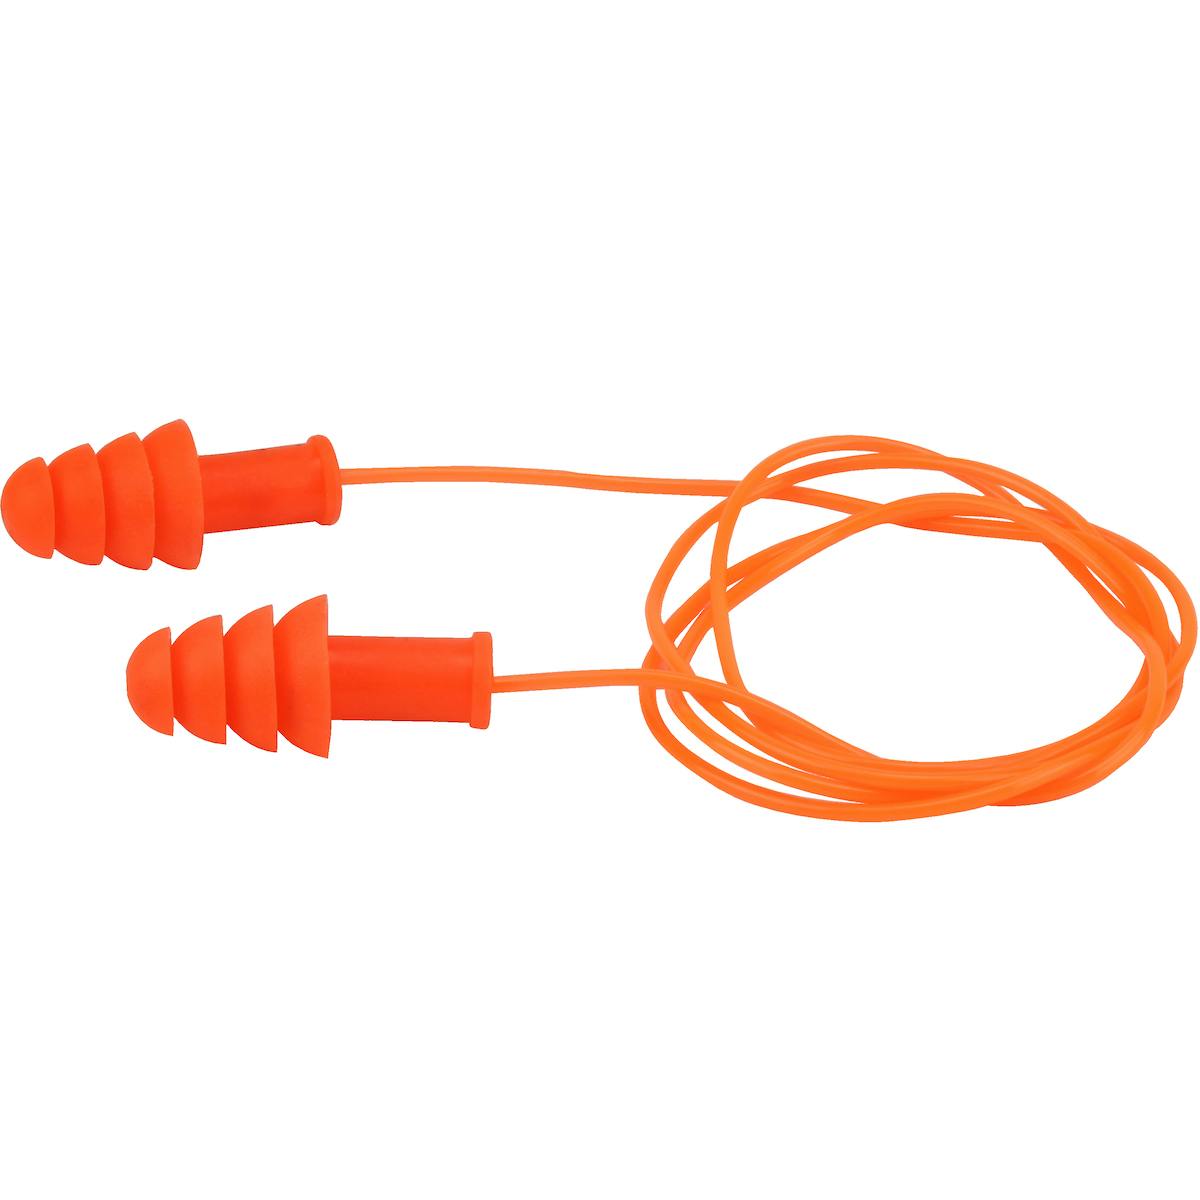 Reusable TPR Corded Ear Plugs - NRR 27, Orange (267-HPR400C) - OS